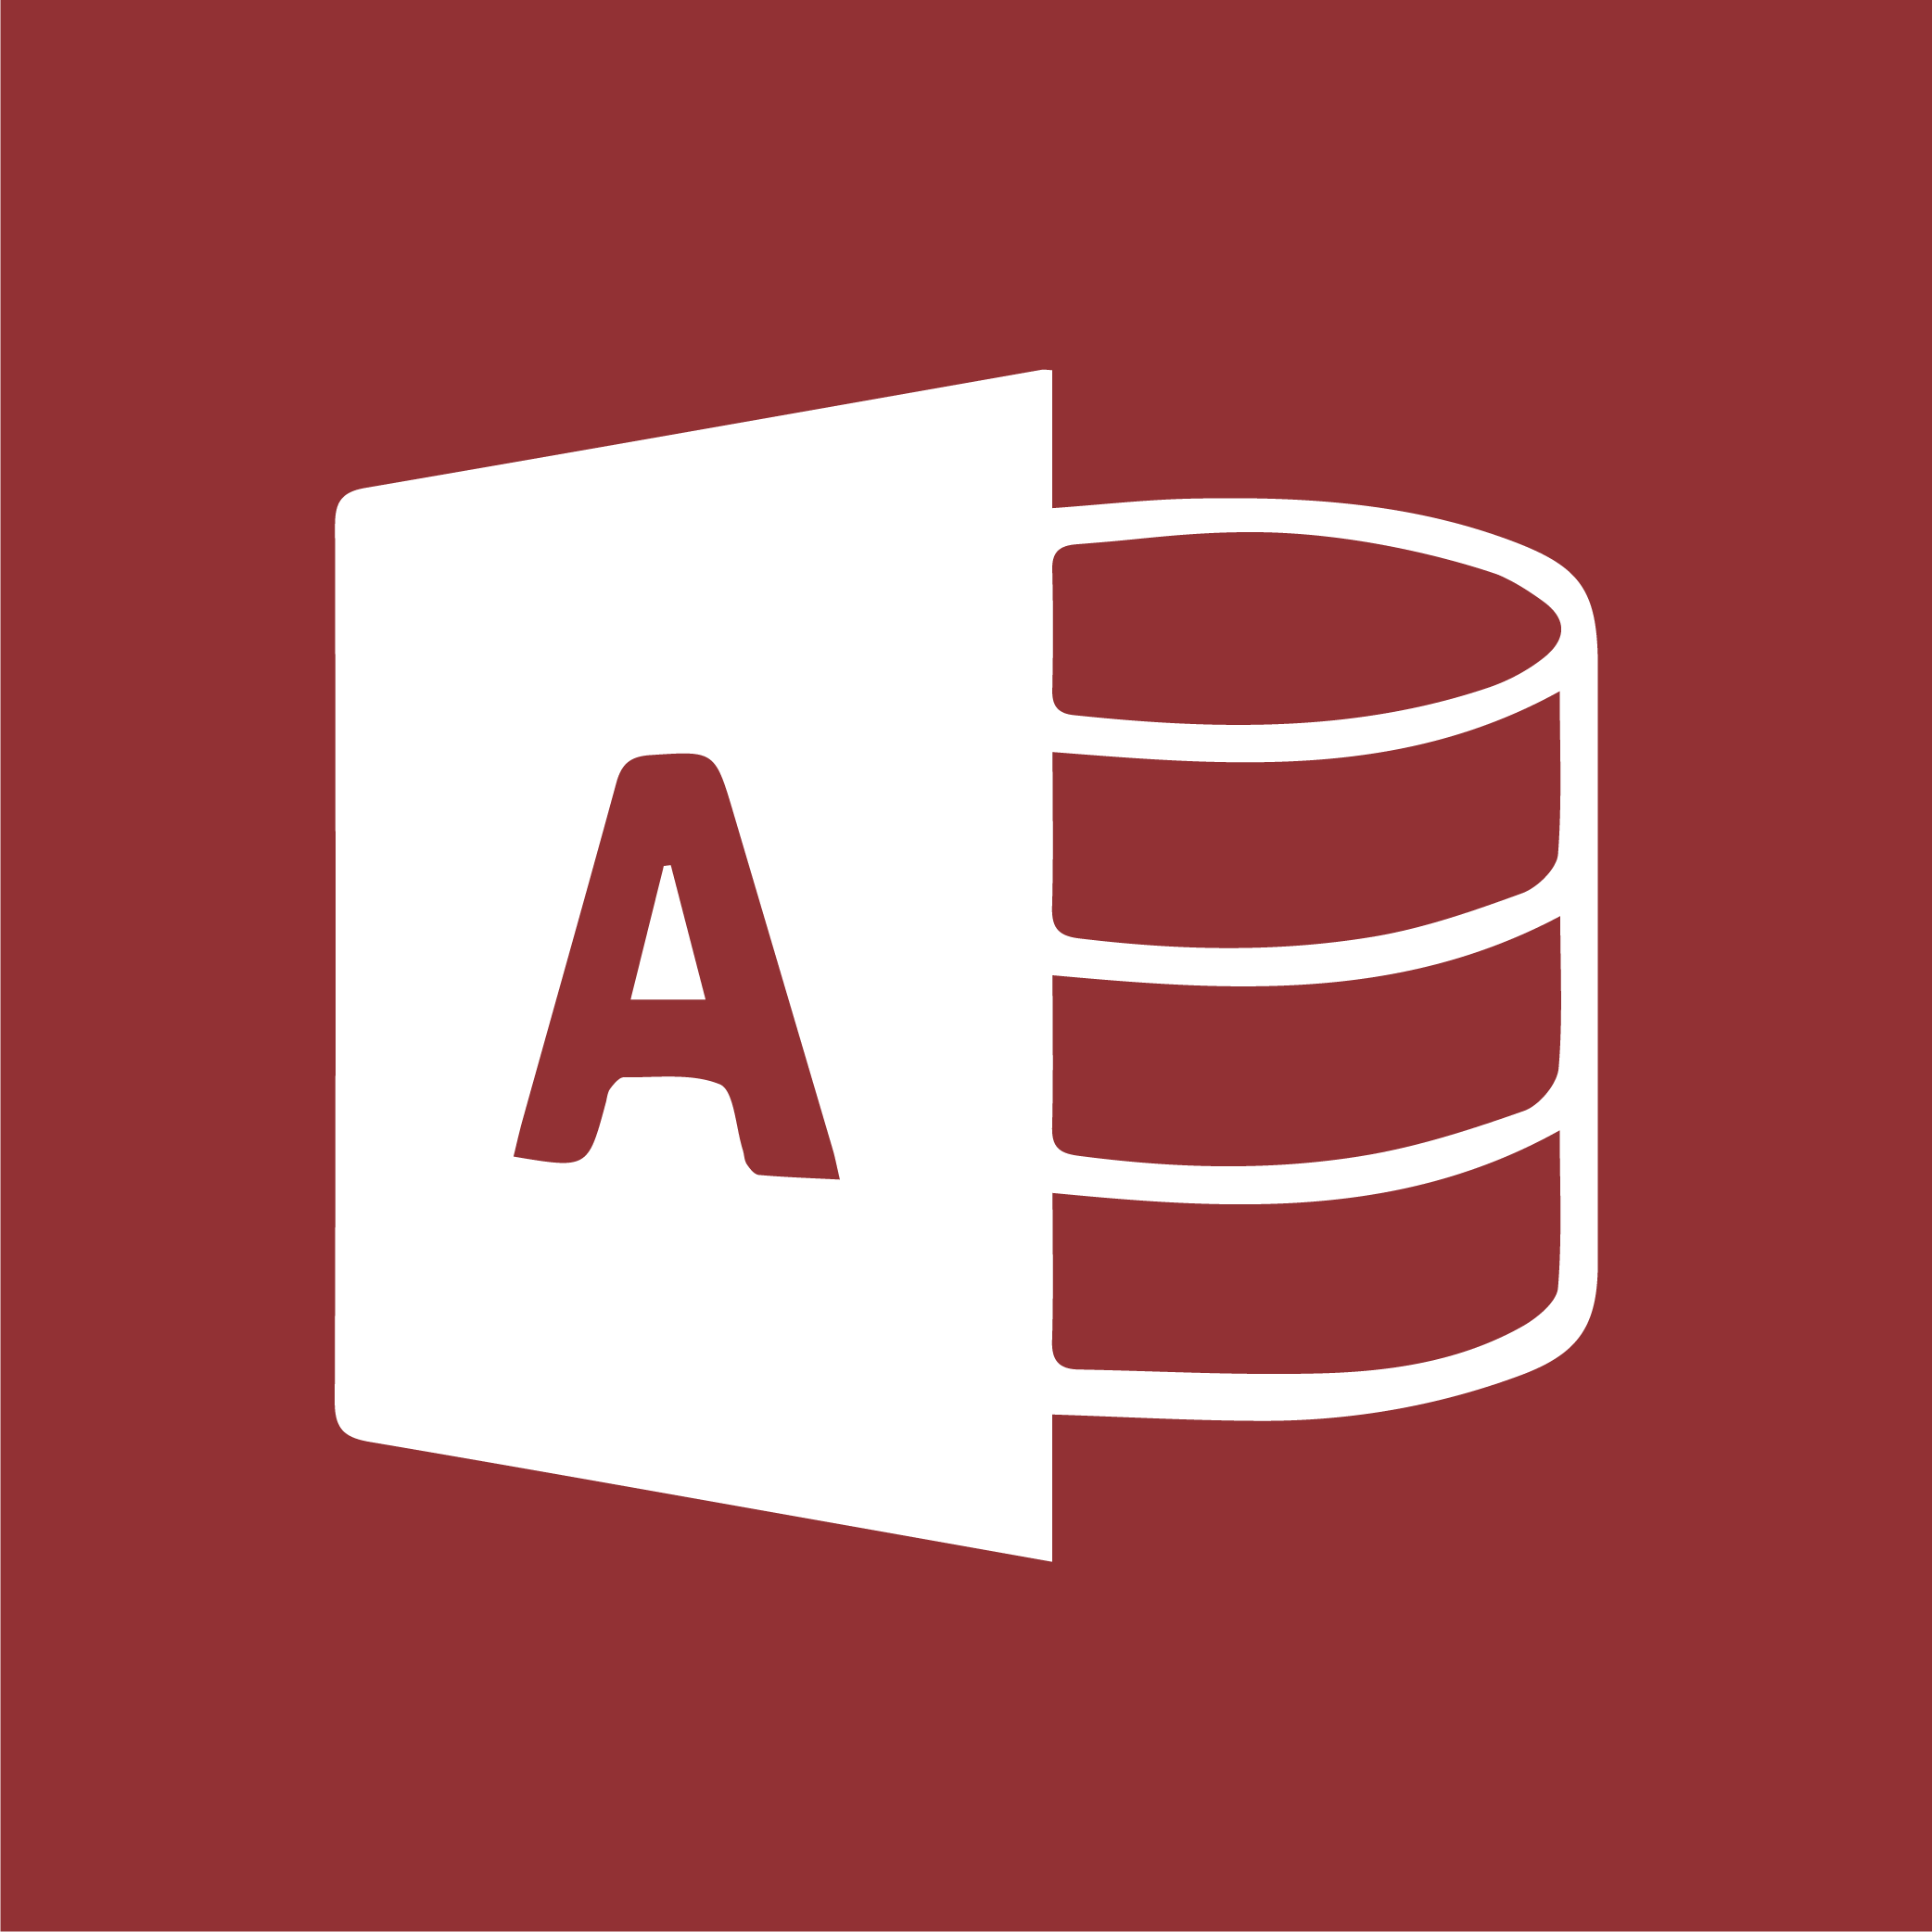 Access life. Иконка MS access. MS access ярлык. Базы данных access логотип. Microsoft access картинки.